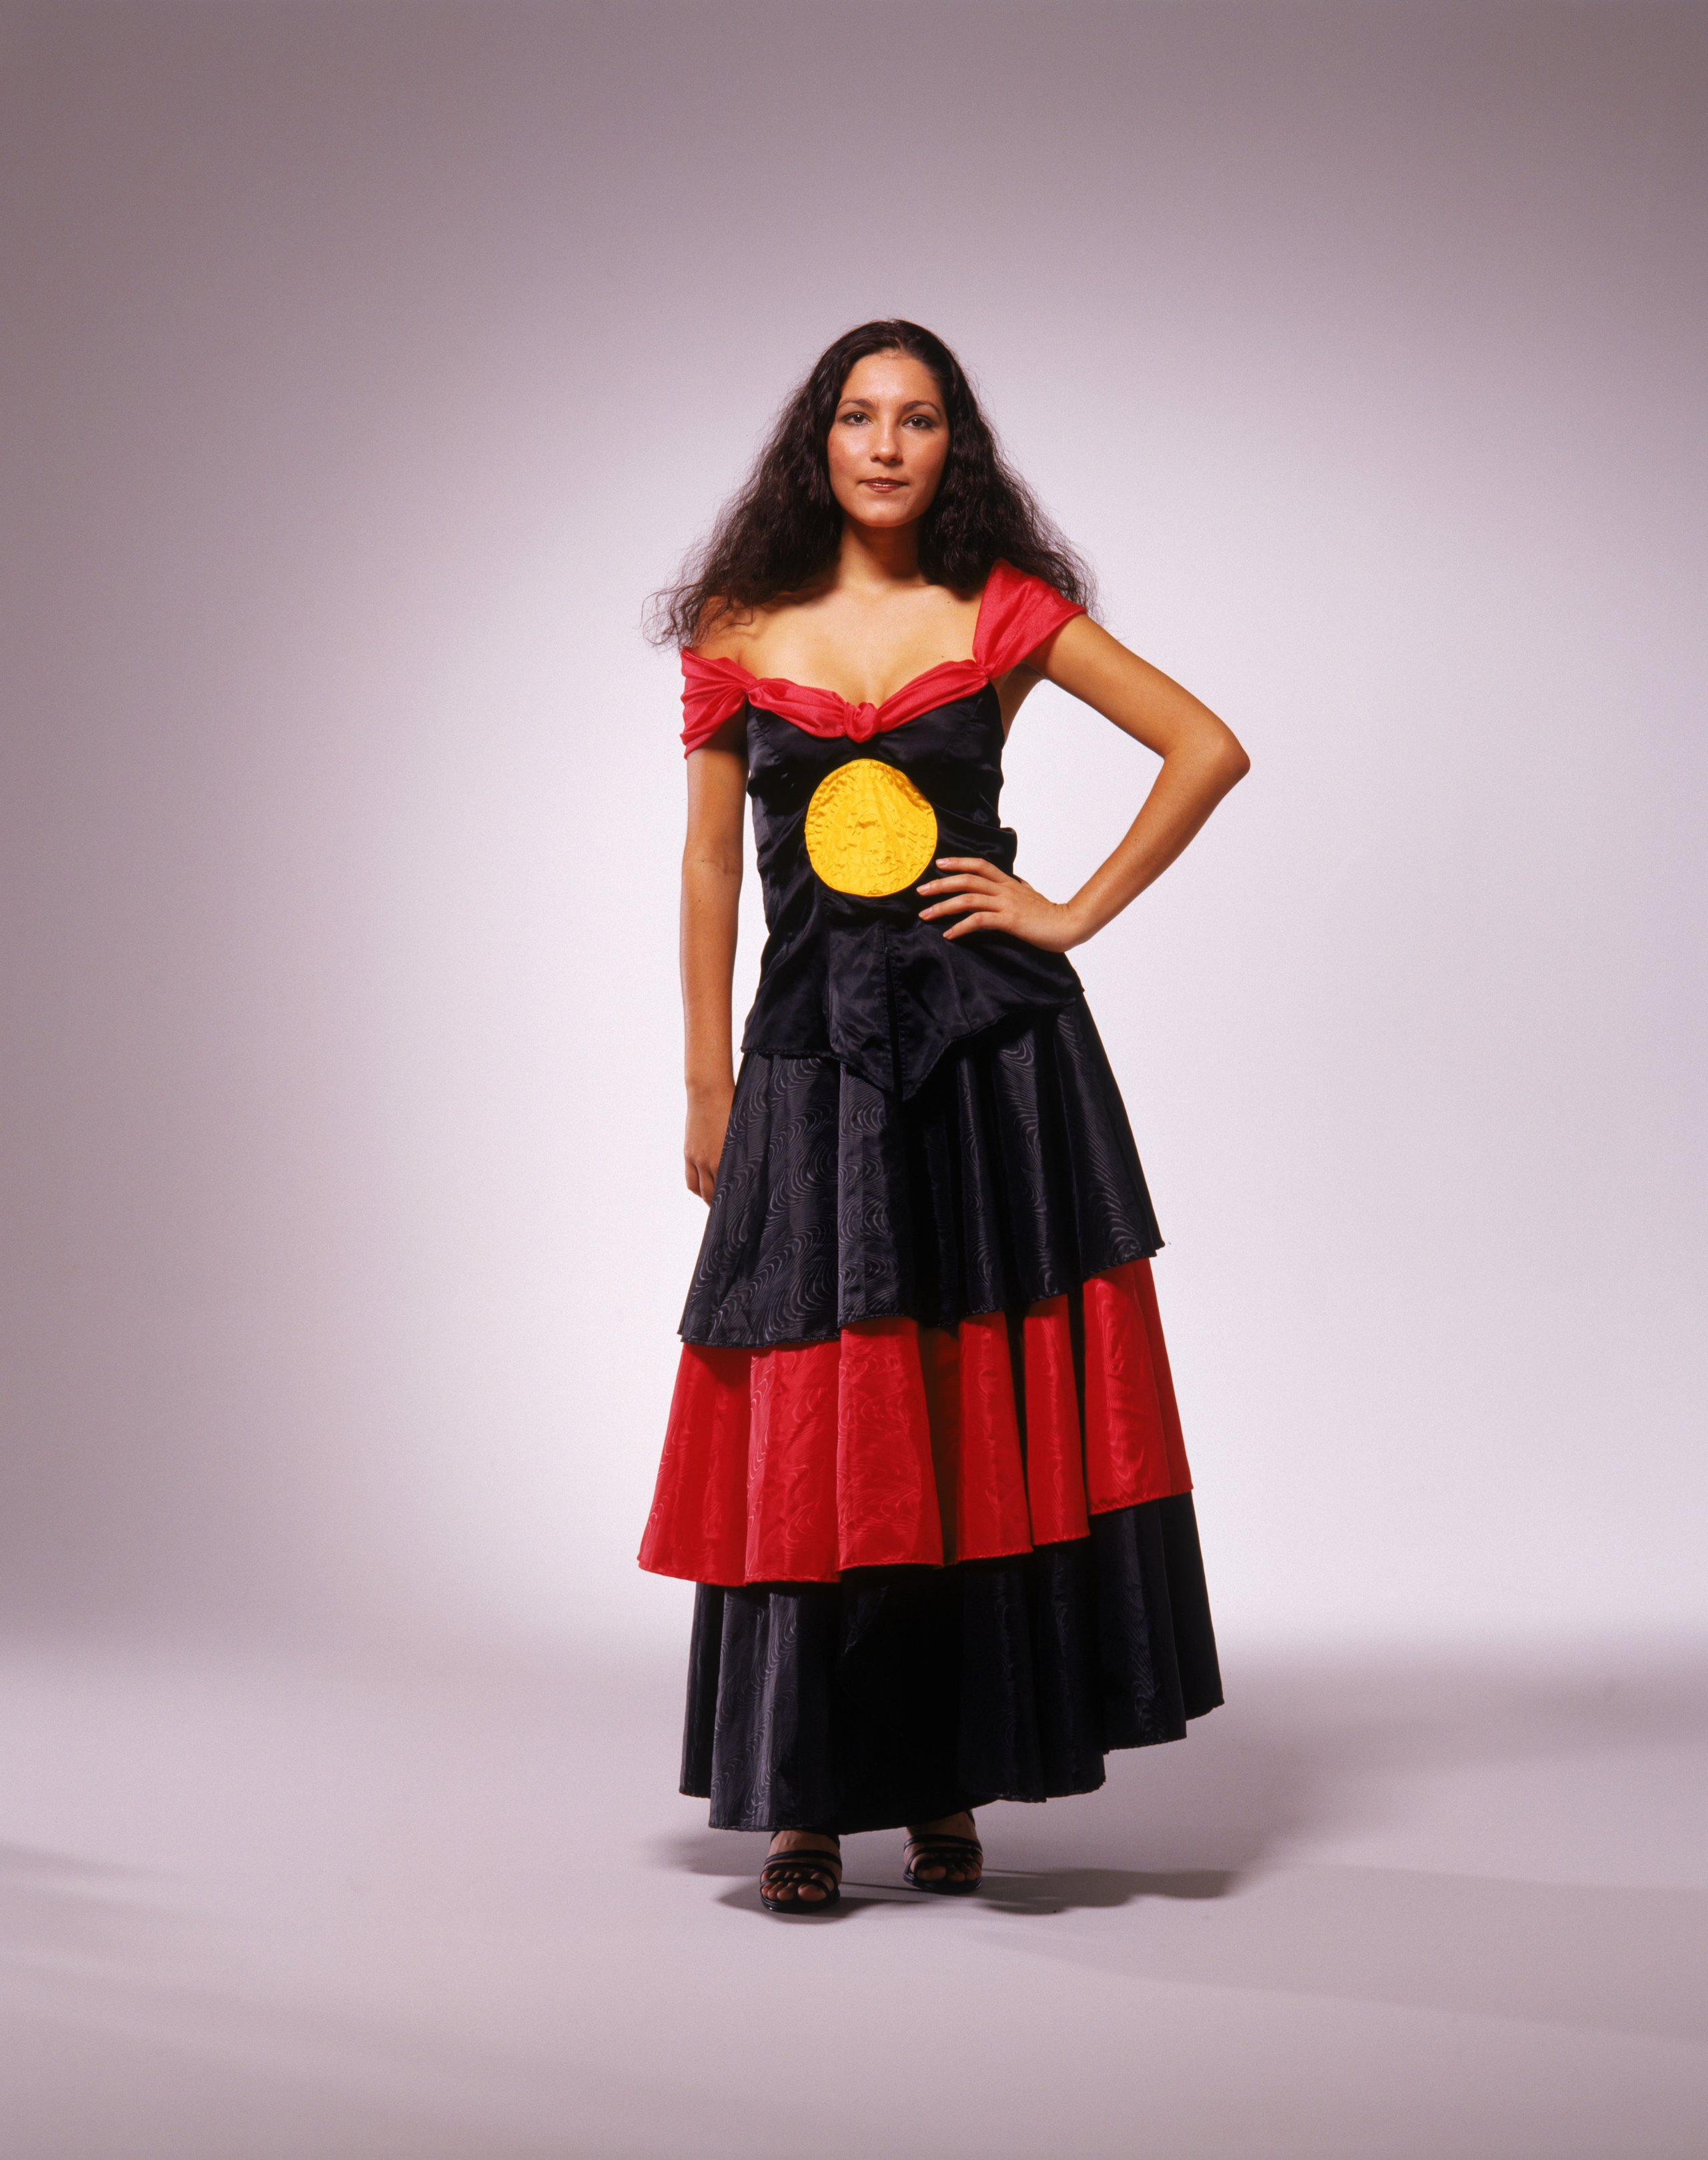 'Aboriginal Wedding Dress', designed by Robyn Caughlan